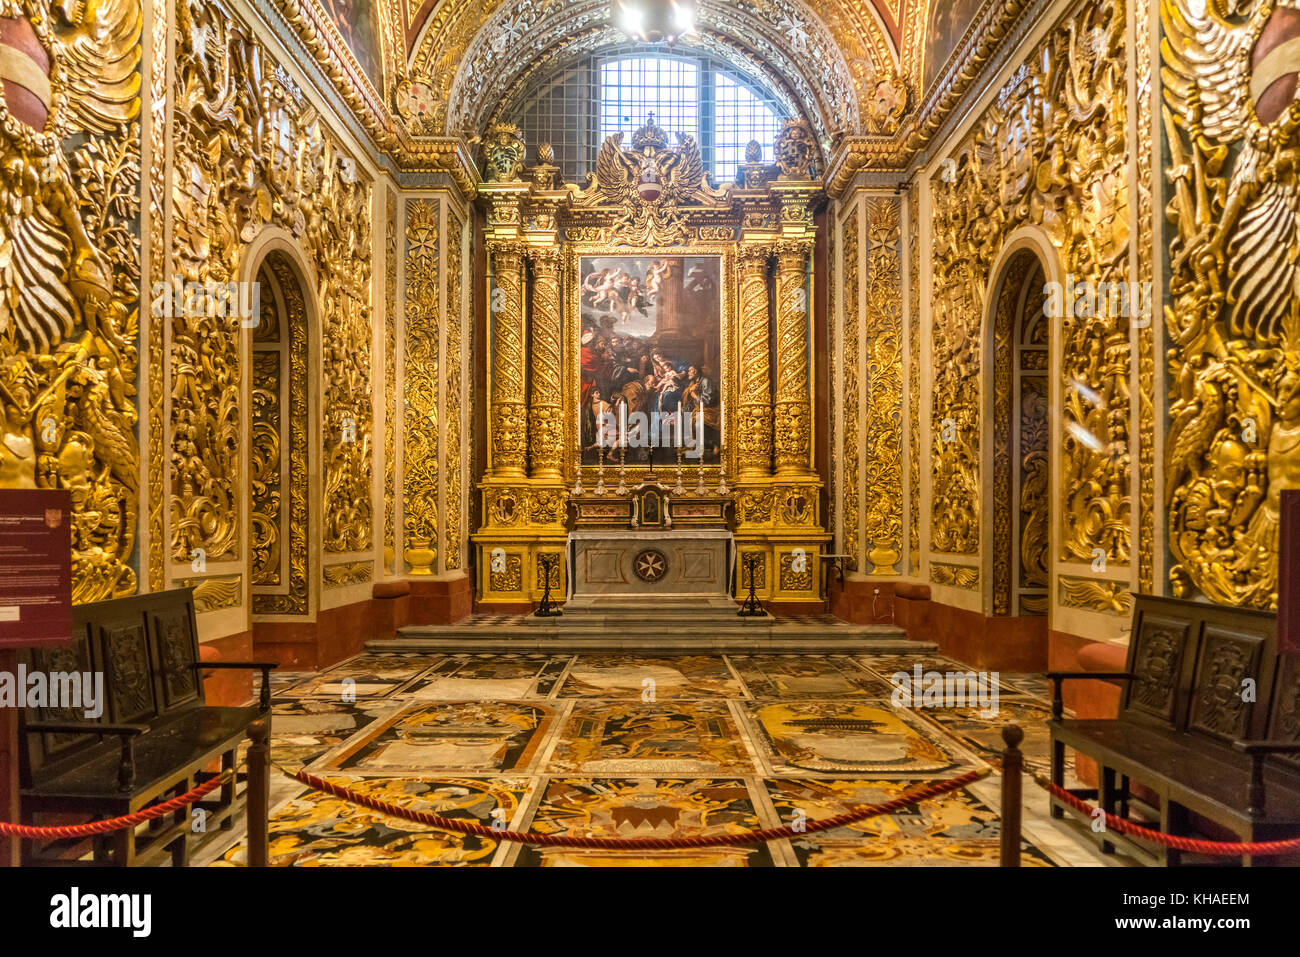 Magnificent chapel, interior of the Roman Catholic St. John's Co-Cathedral, Valletta, Malta Stock Photo